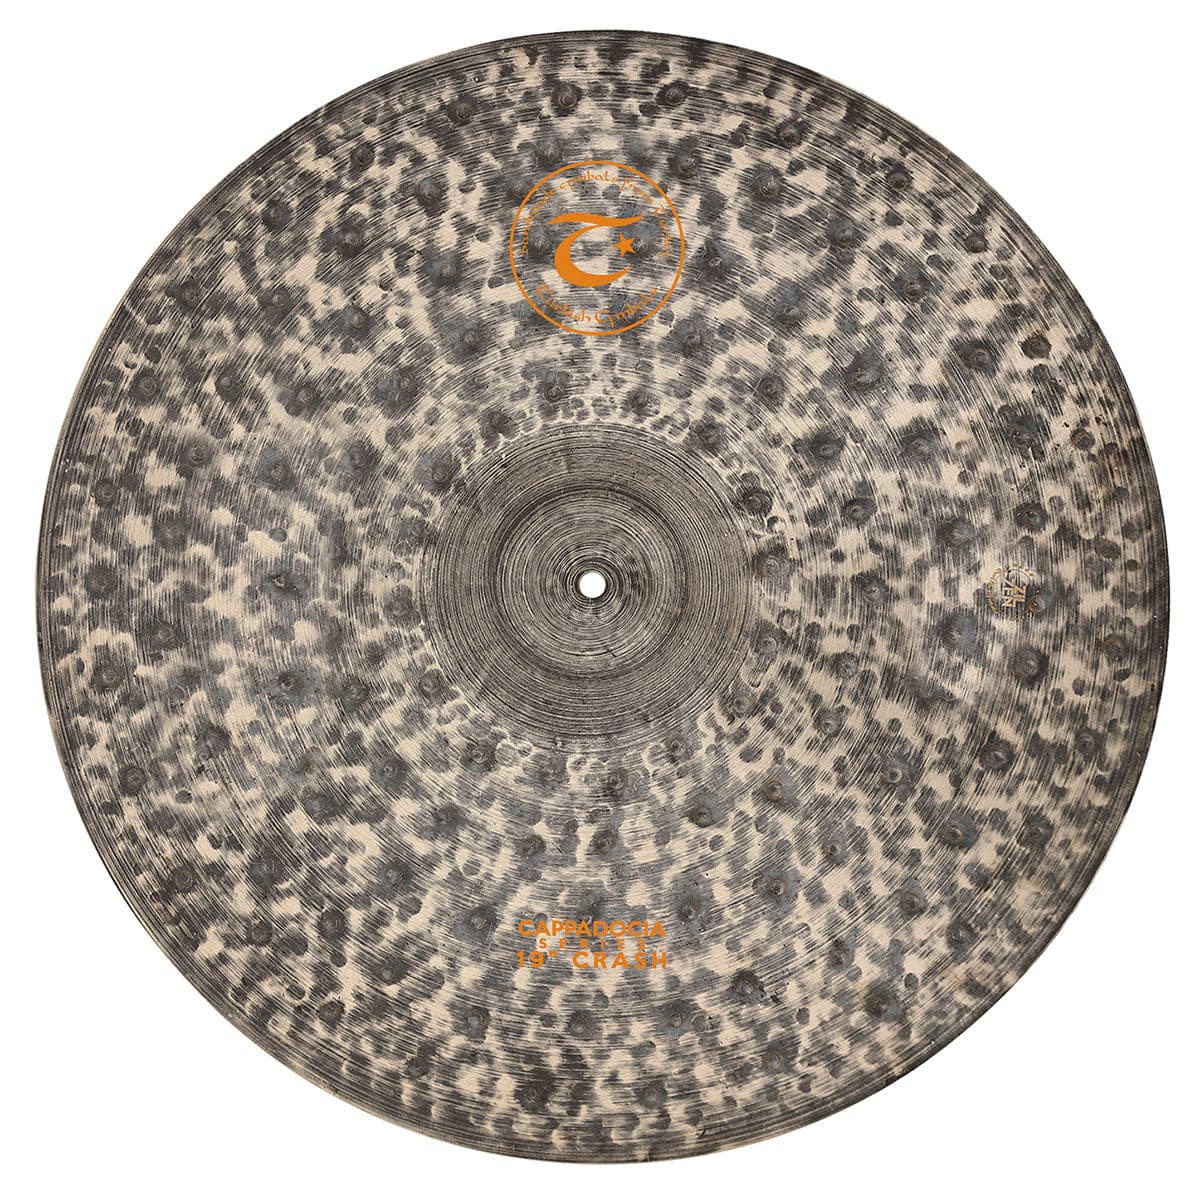 Turkish Cappadocia Crash Cymbal 19" 1517 grams